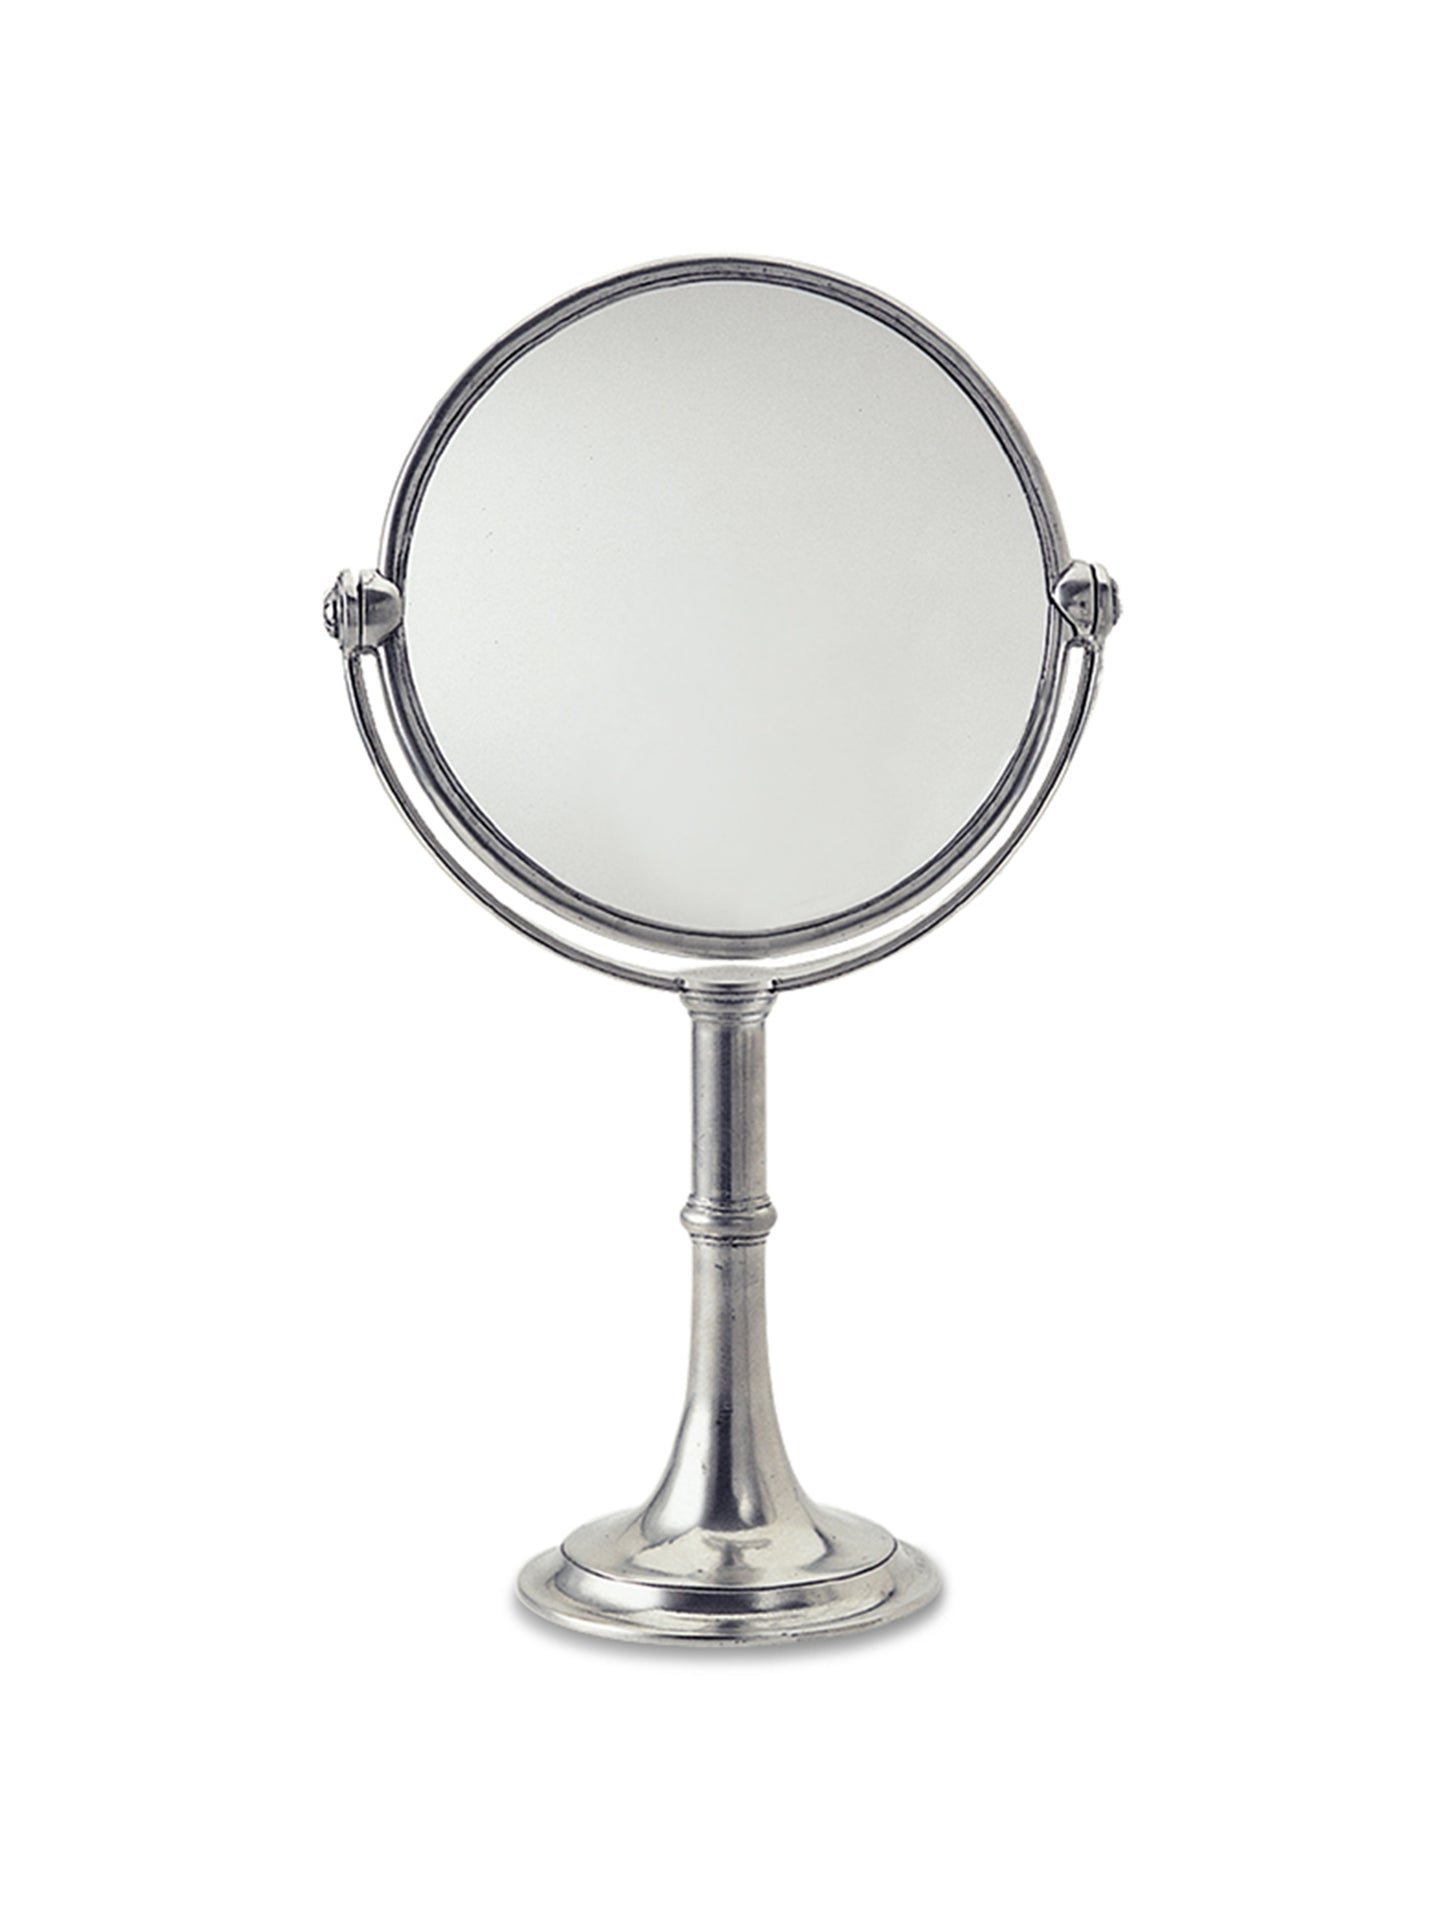 MATCH Pewter Vanity Mirror